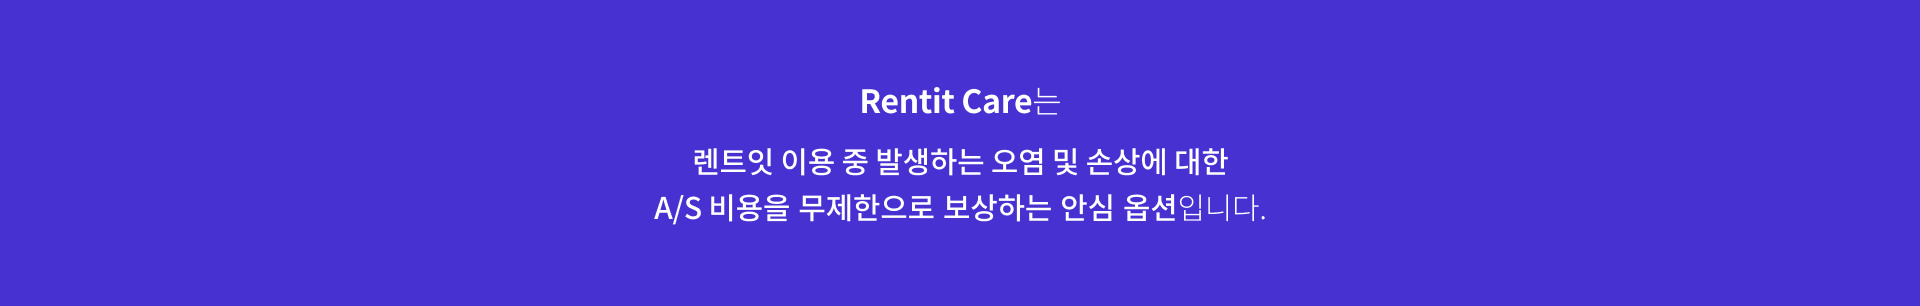 Rentit Care는 렌트잇 이용 중 발생하는 오염 및 손상에 대한 A/S 비용을 무제한으로 보상하는 안심 옵션입니다.